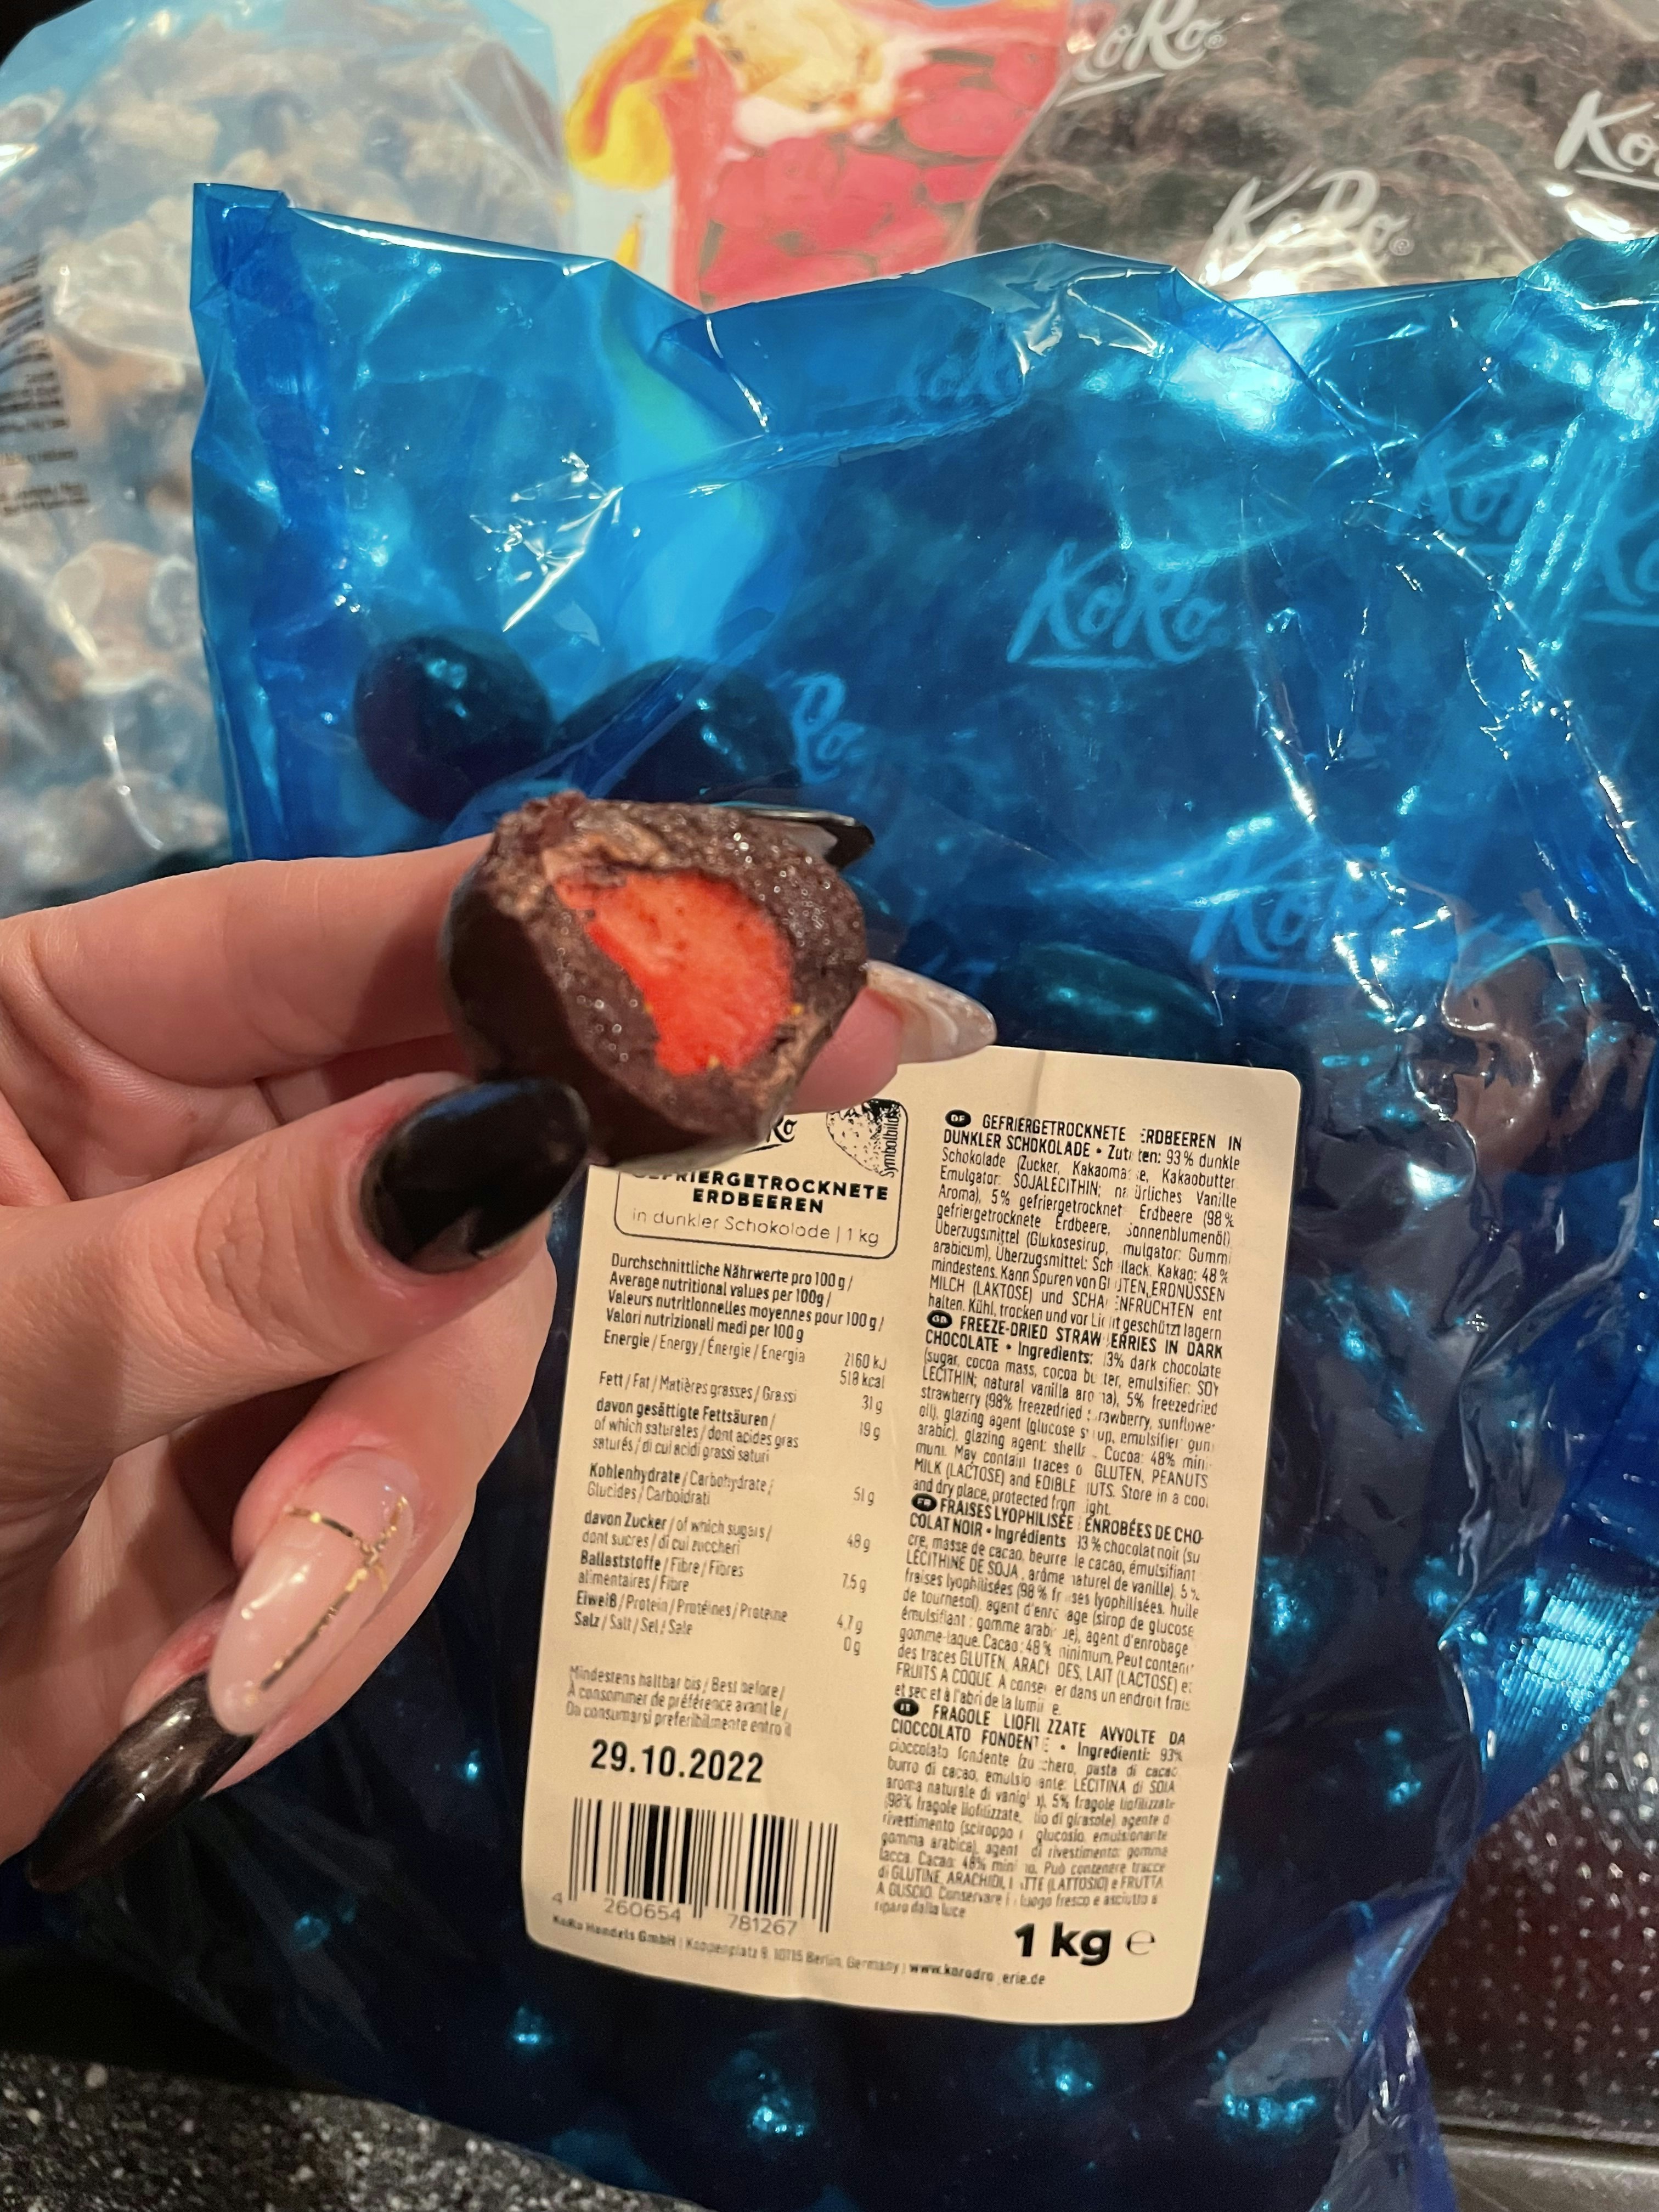 Gefriergetrocknete Erdbeeren in dunkler Schokolade kaufen | KoRo Swiss